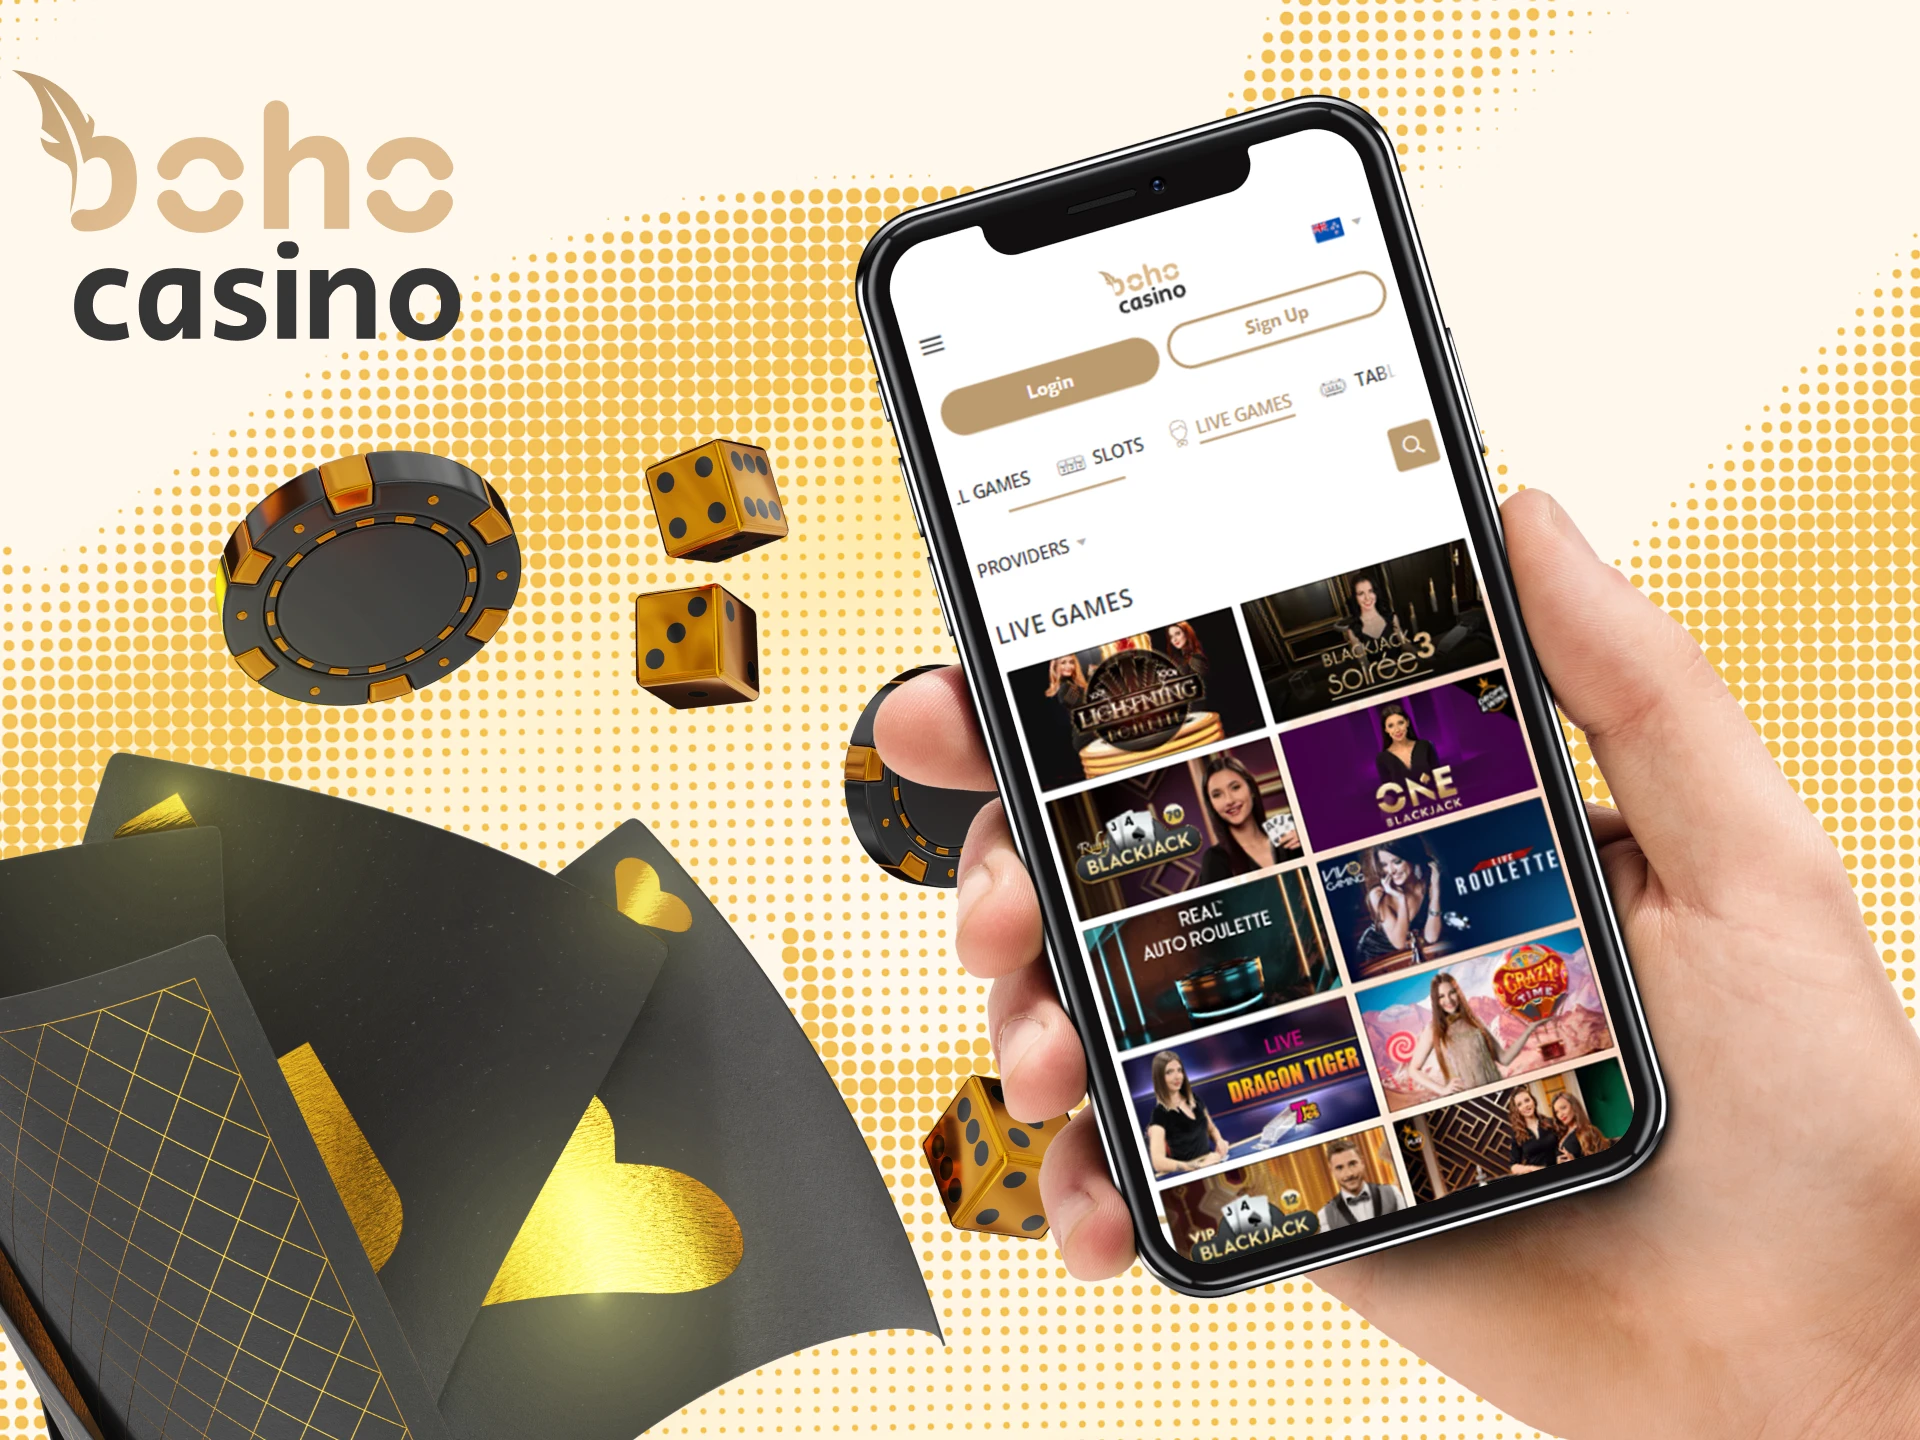 Boho Casino's live gaming app is in development.